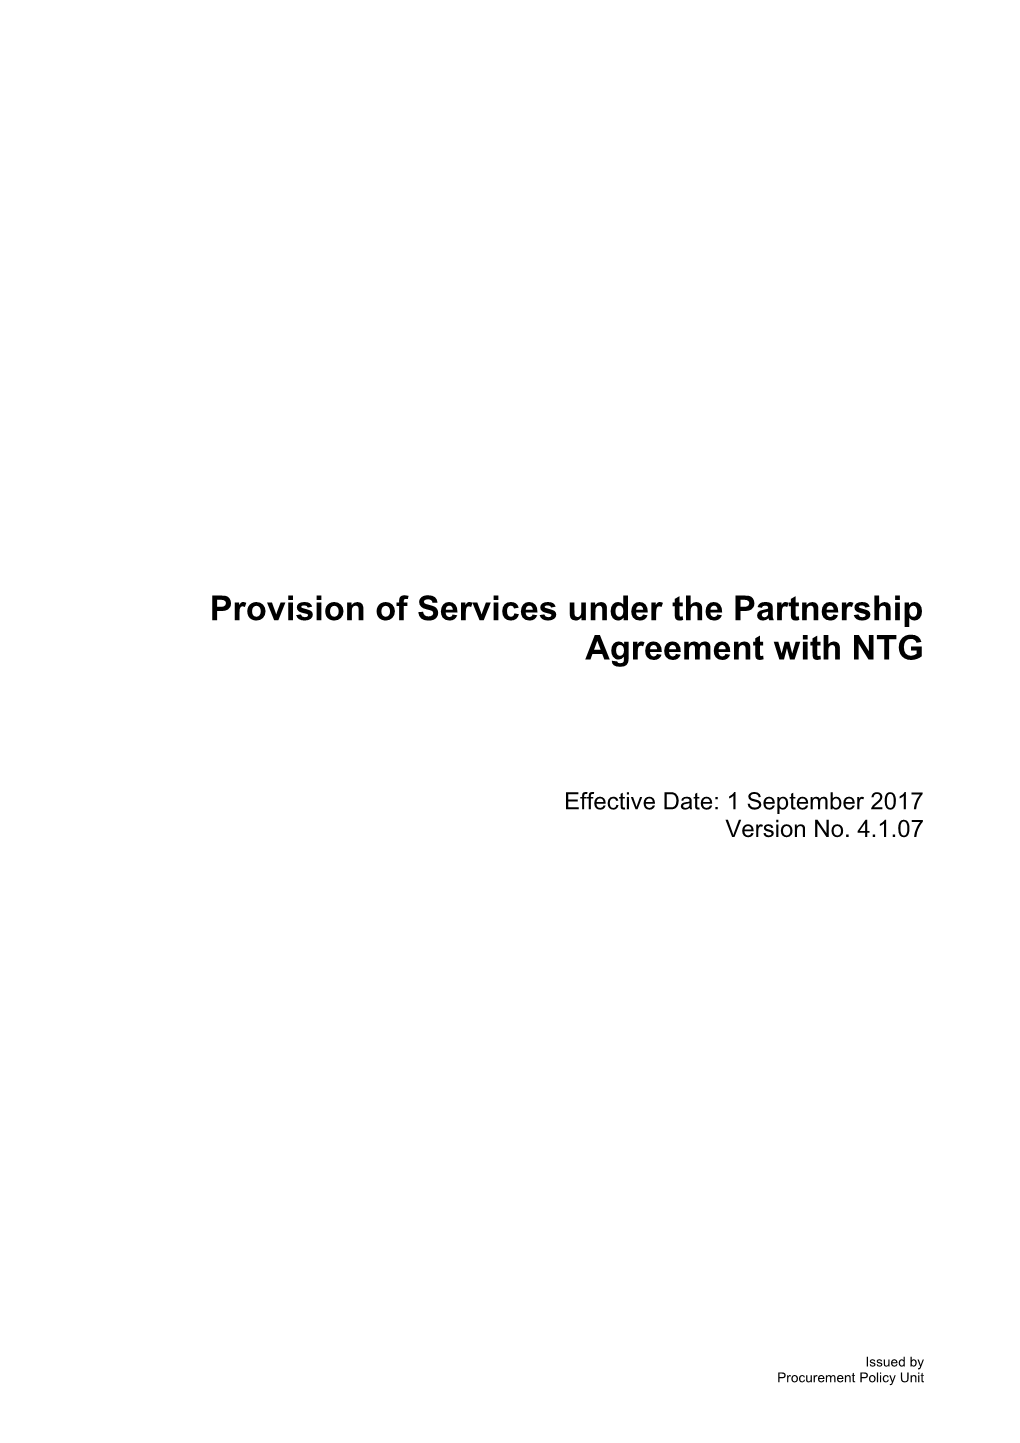 Services Under Partnership Agreement - V 4.1.06 (28 January 2014)